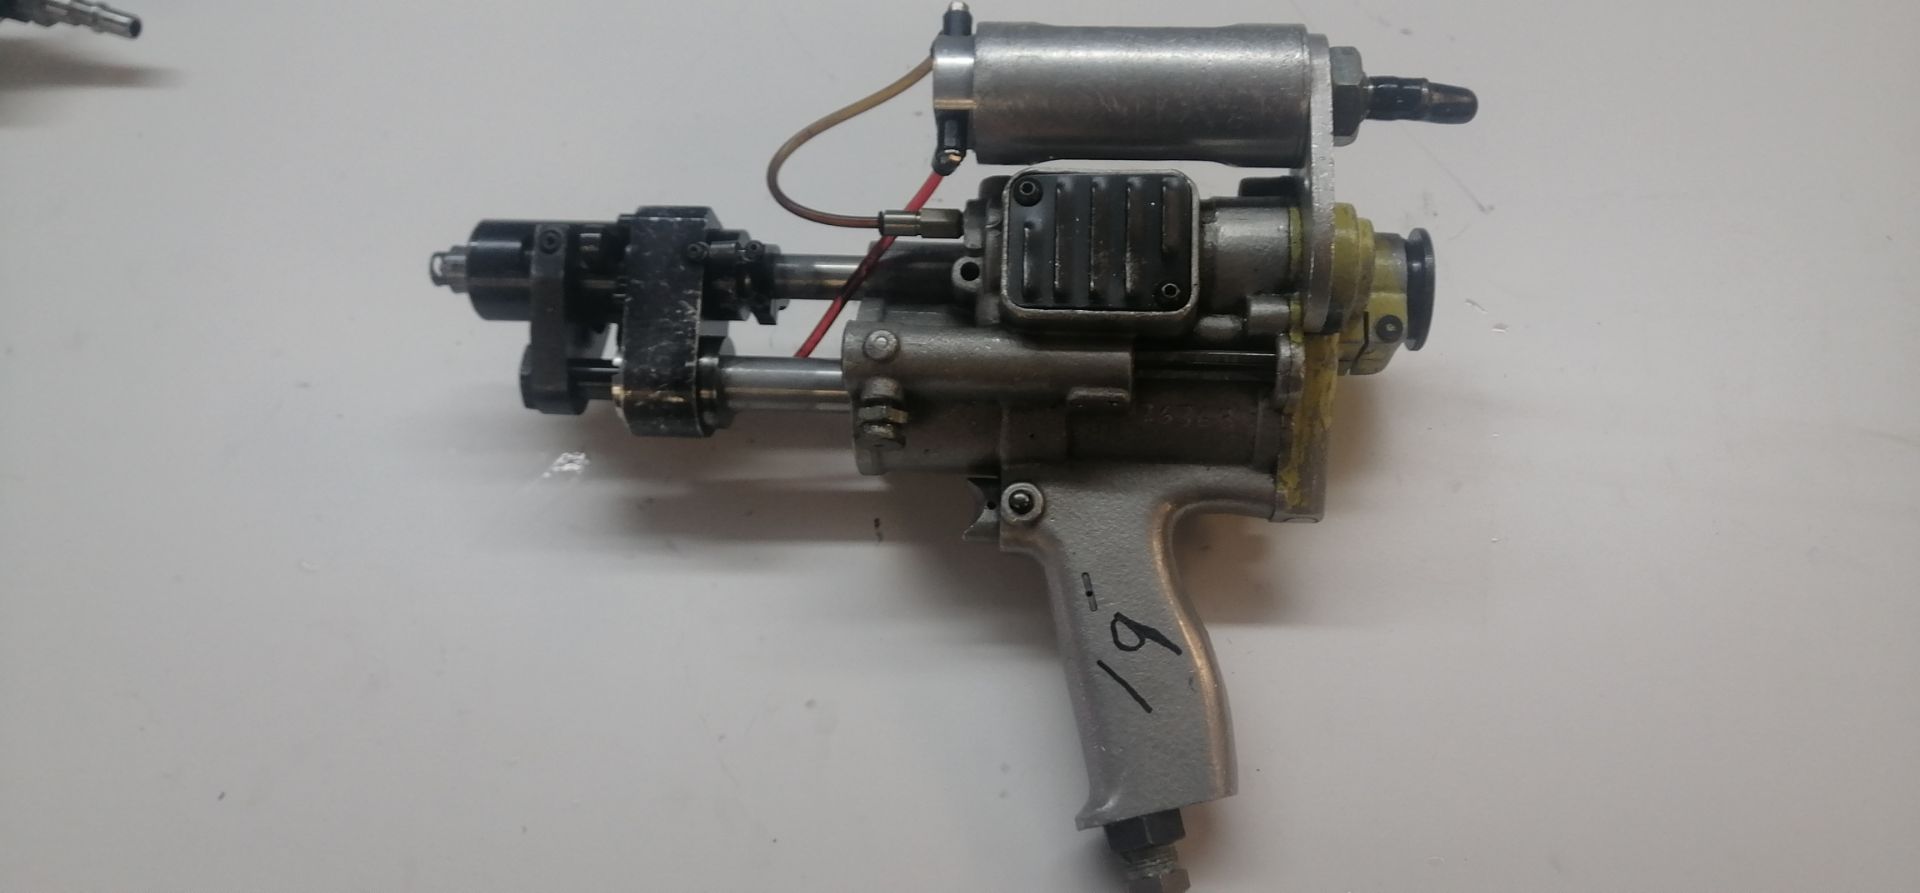 Quackenbush Dresser Tools Pneumatic Drill Q-Matic - Image 2 of 4